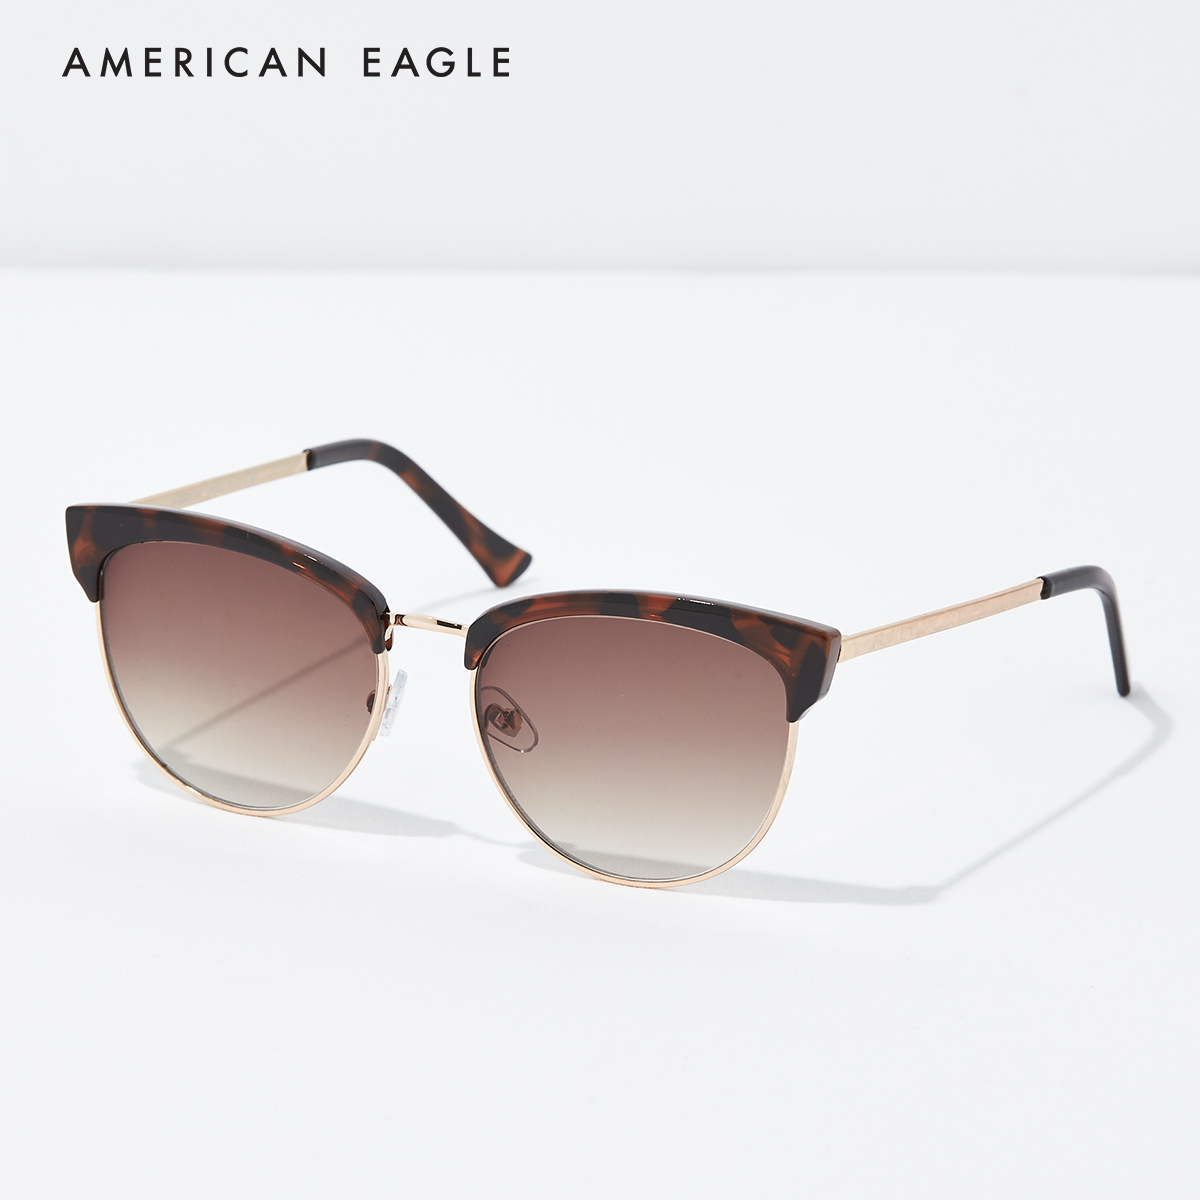 American Eagle Tortoise Clubmaster Sunglasses แว่นตา ผู้หญิง แฟชั่น(048-1118-251)